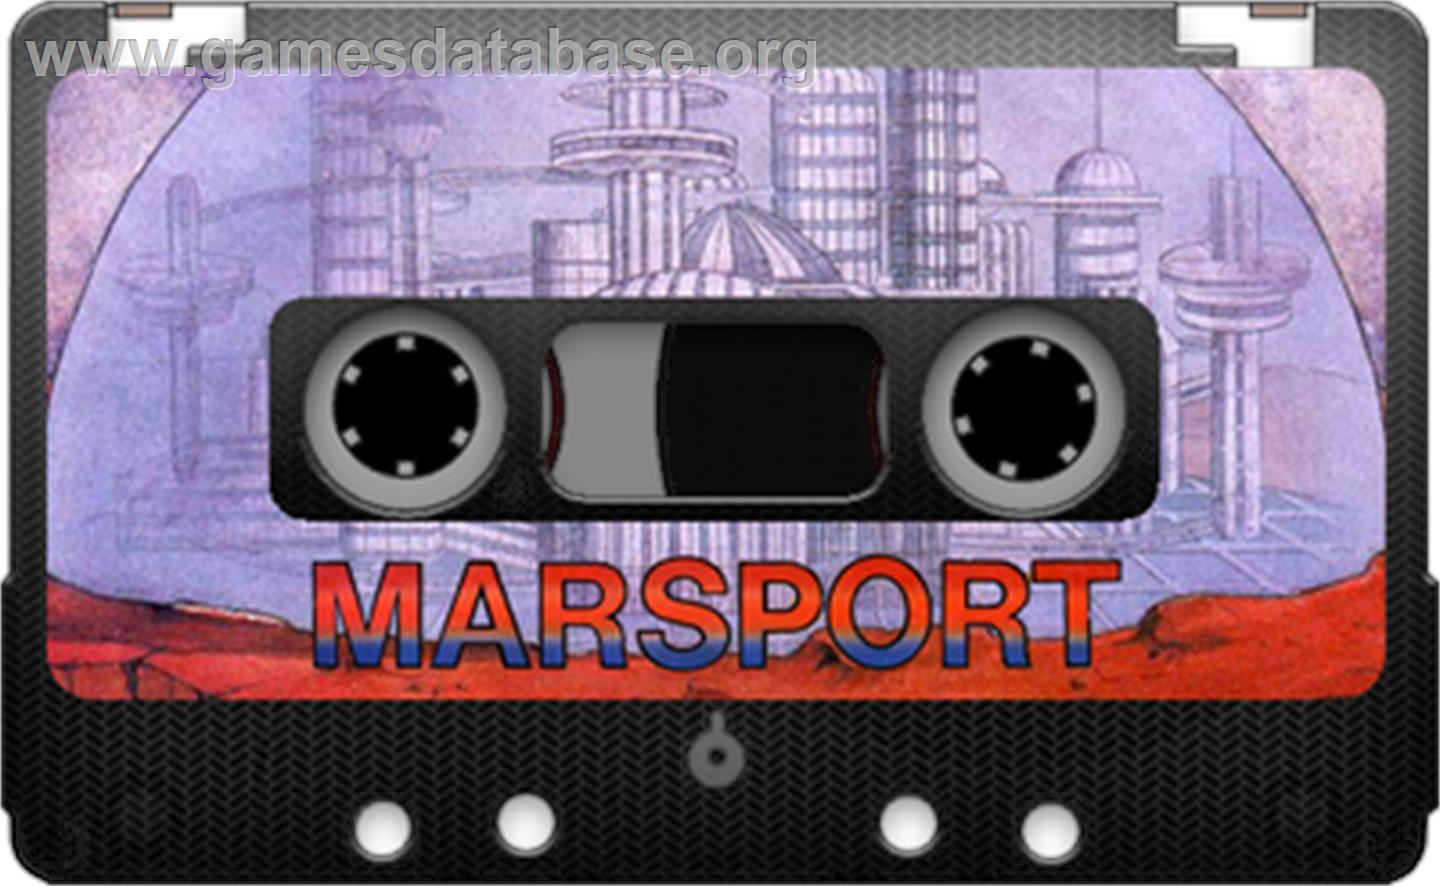 Marsport - Sinclair ZX Spectrum - Artwork - Cartridge